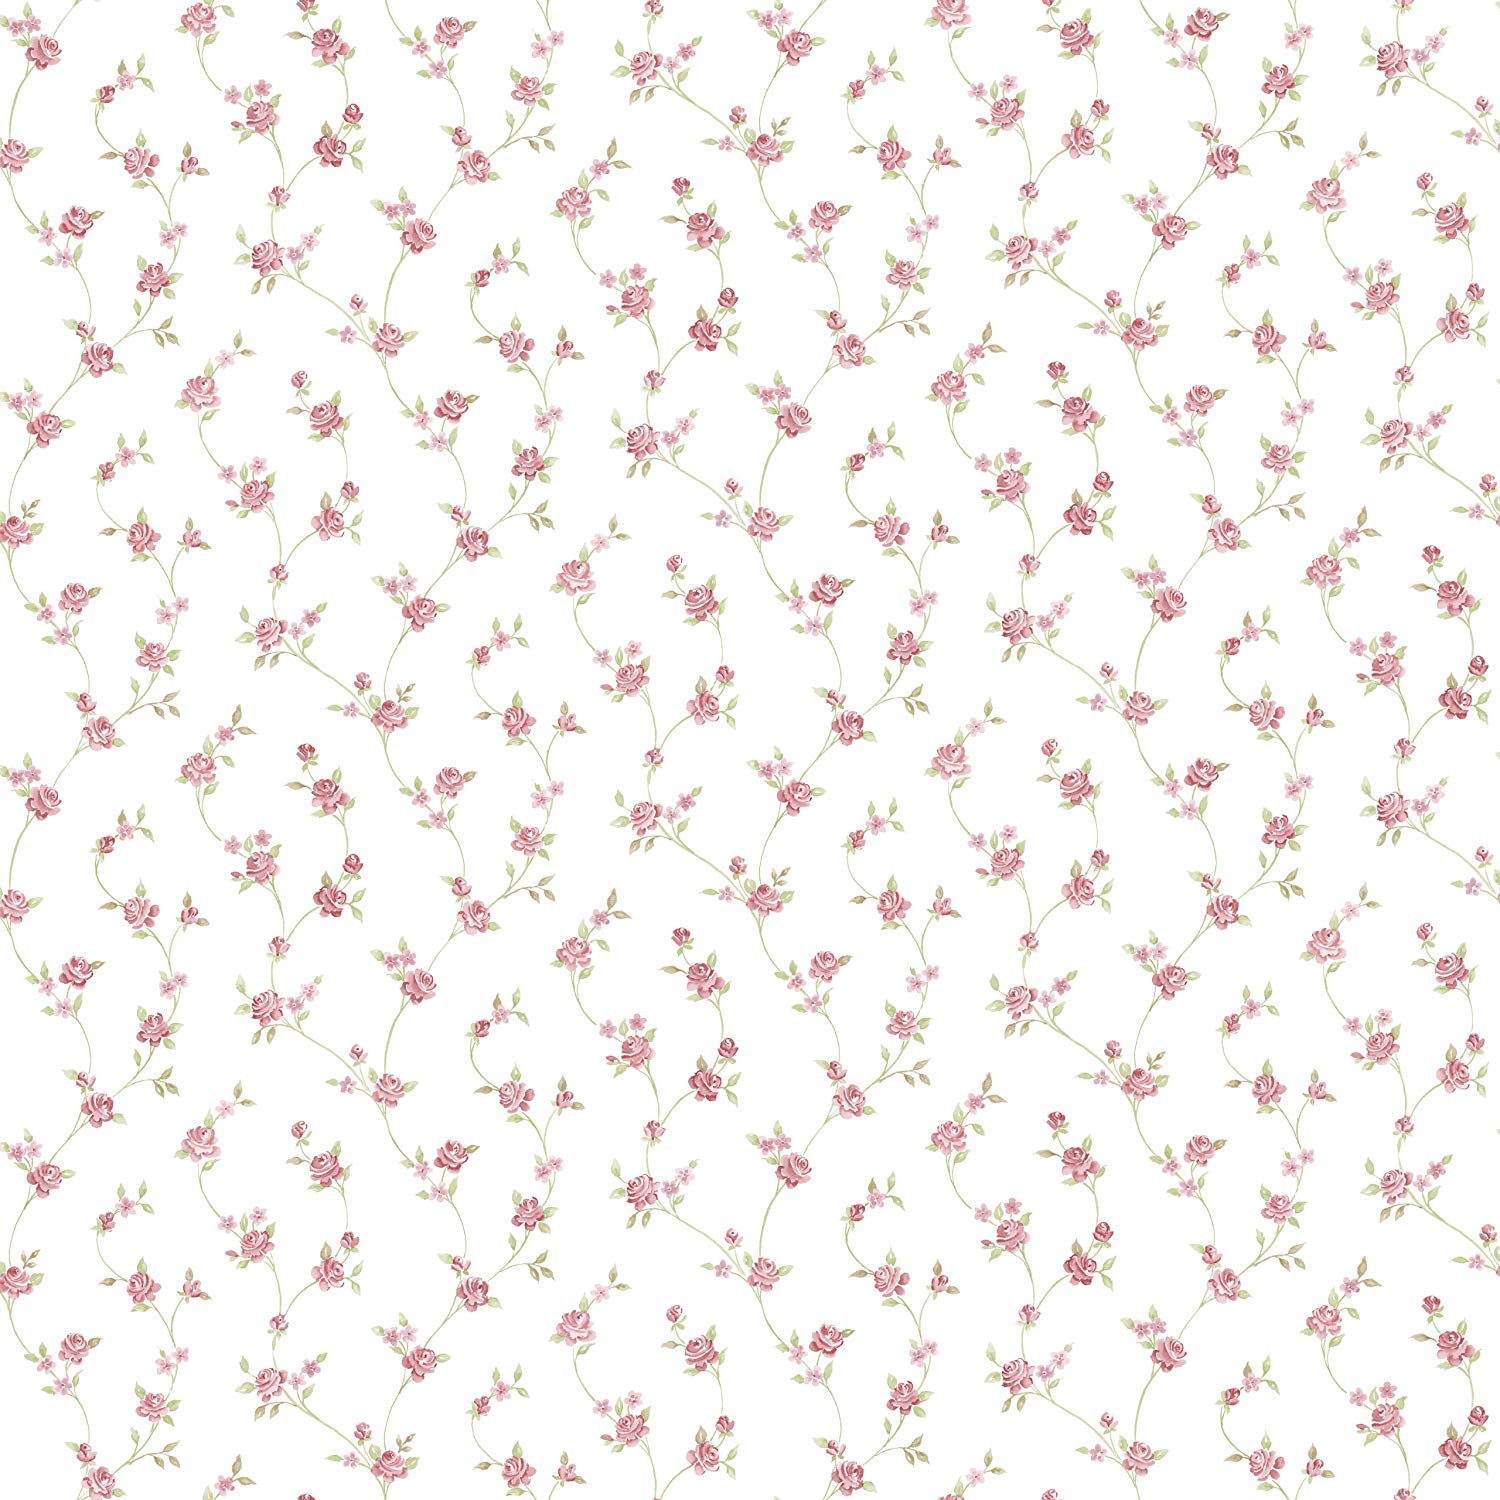 galerie-24 Non-Woven Wallpaper Floral Themes Essener G23283 Dusky Pink Flowers Floral 